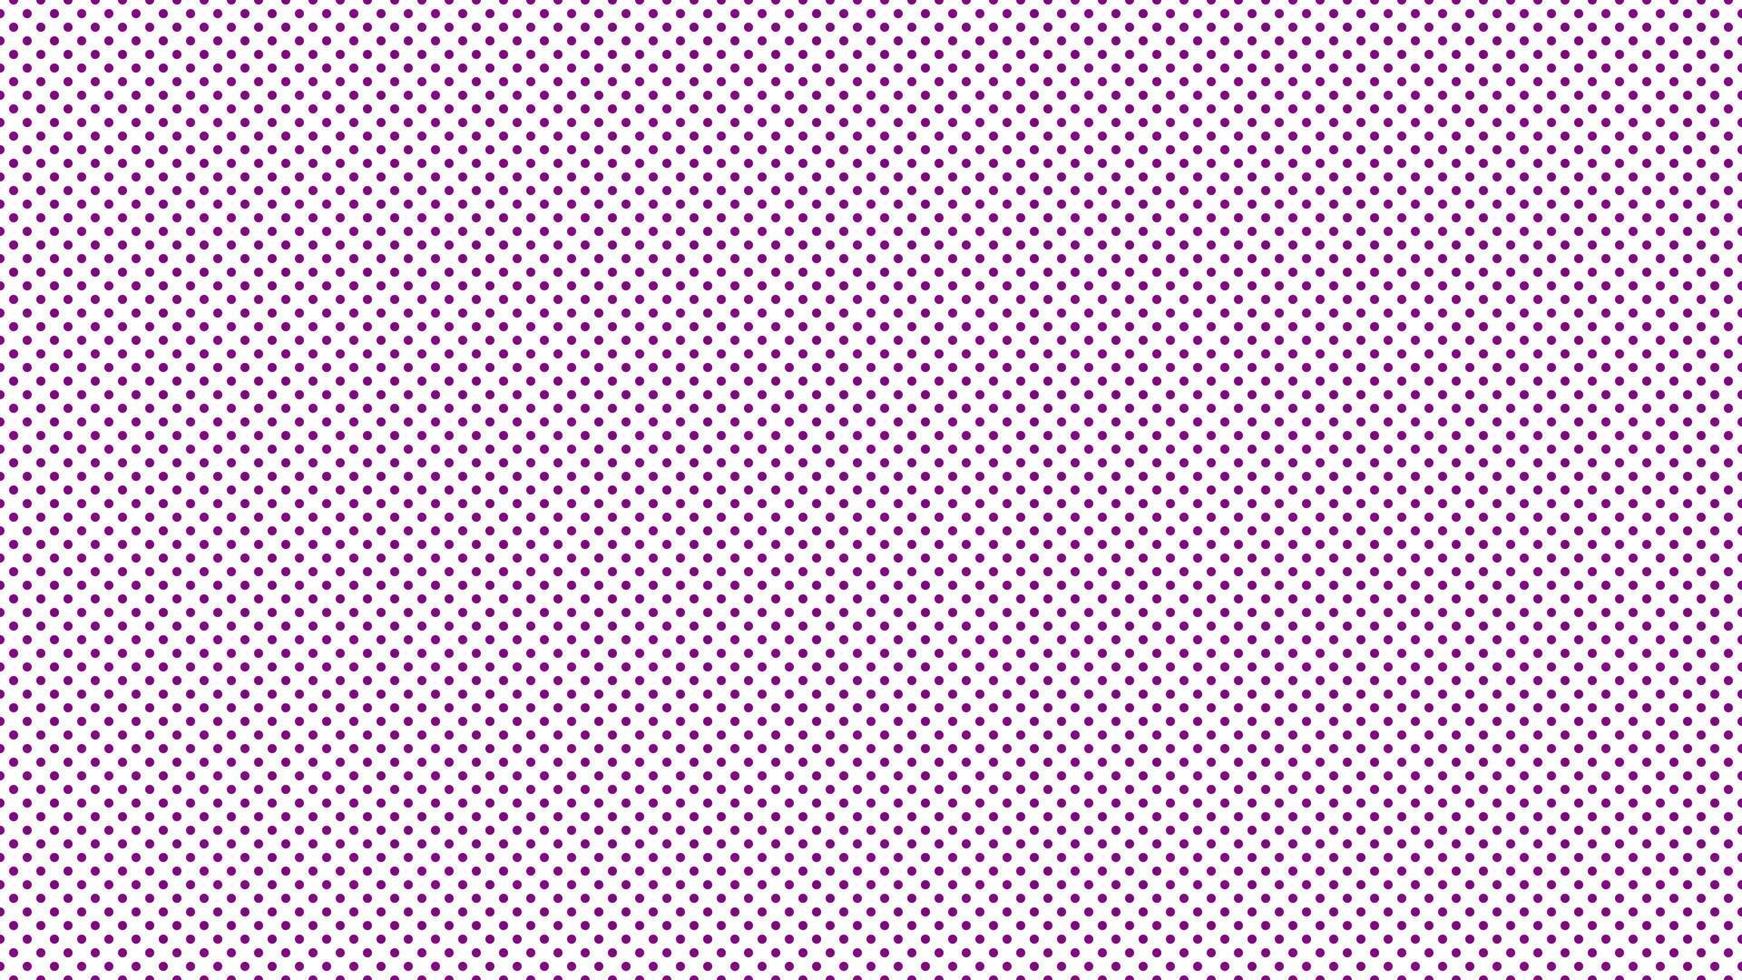 purple color polka dots background vector